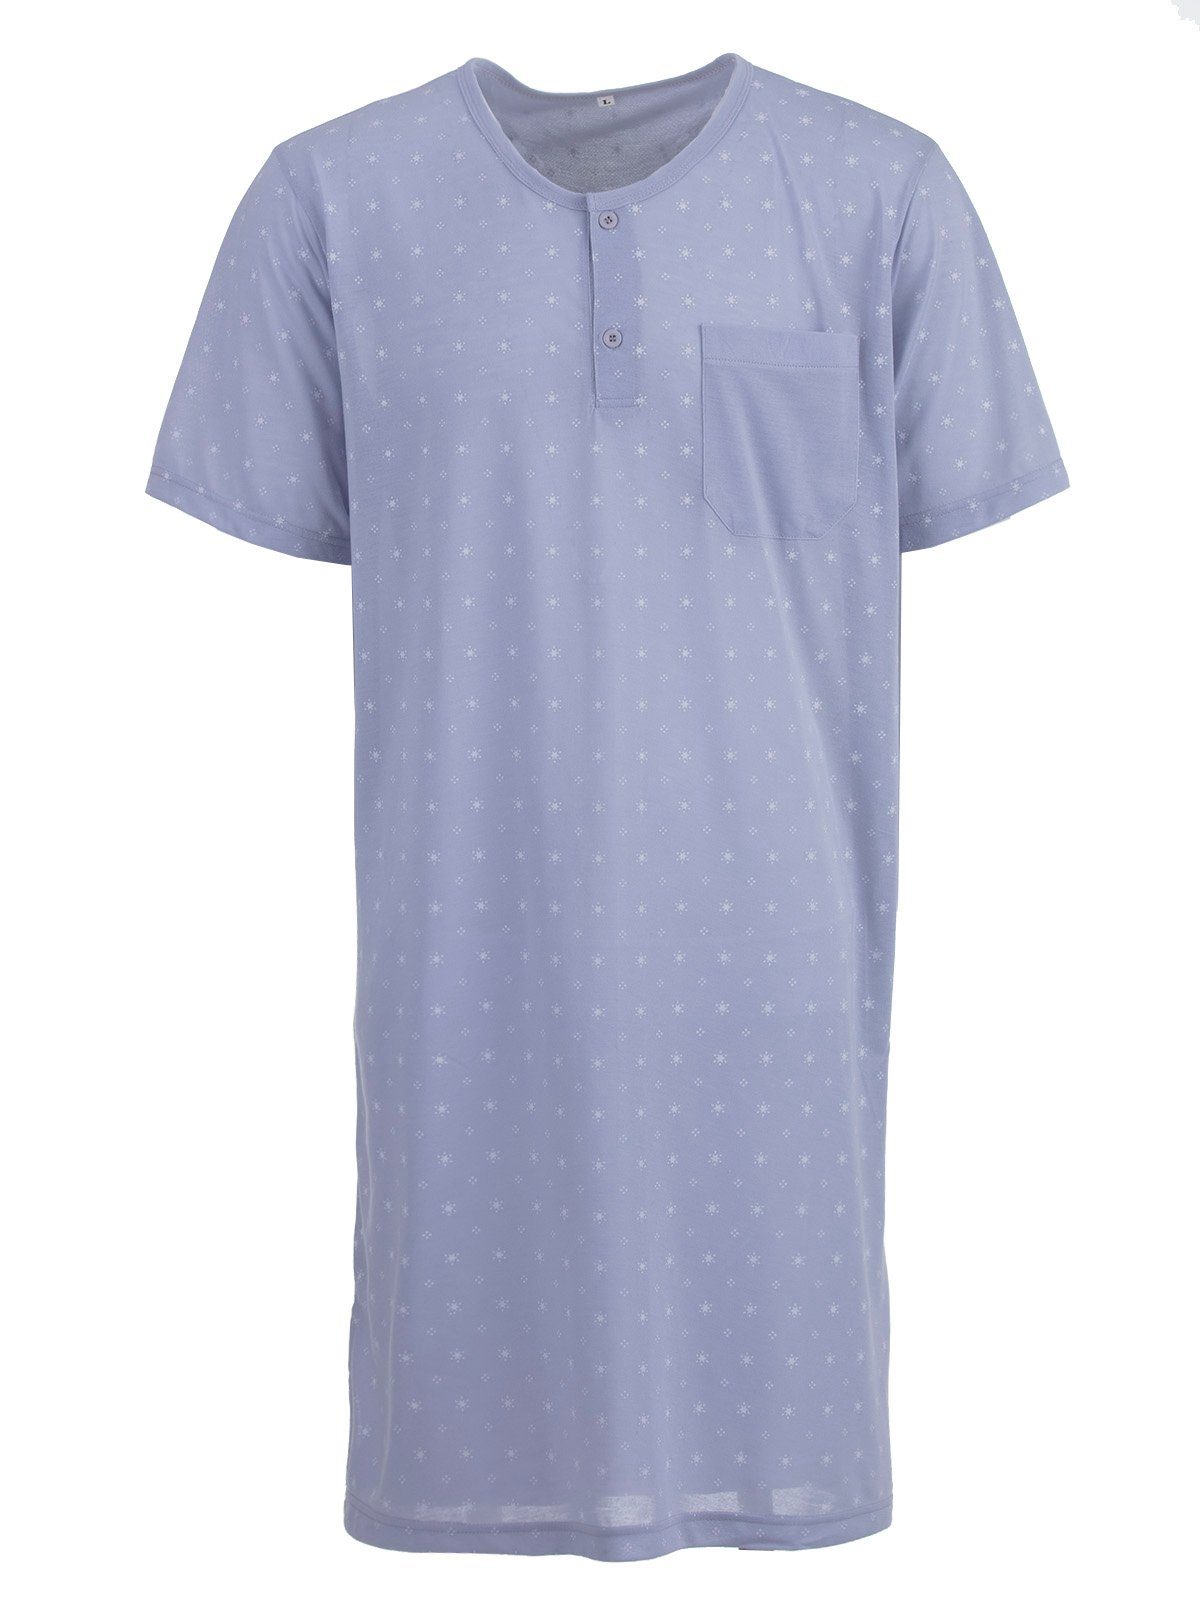 Lucky Nachthemd Nachthemd Kurzarm - Sonne Brusttasche grau